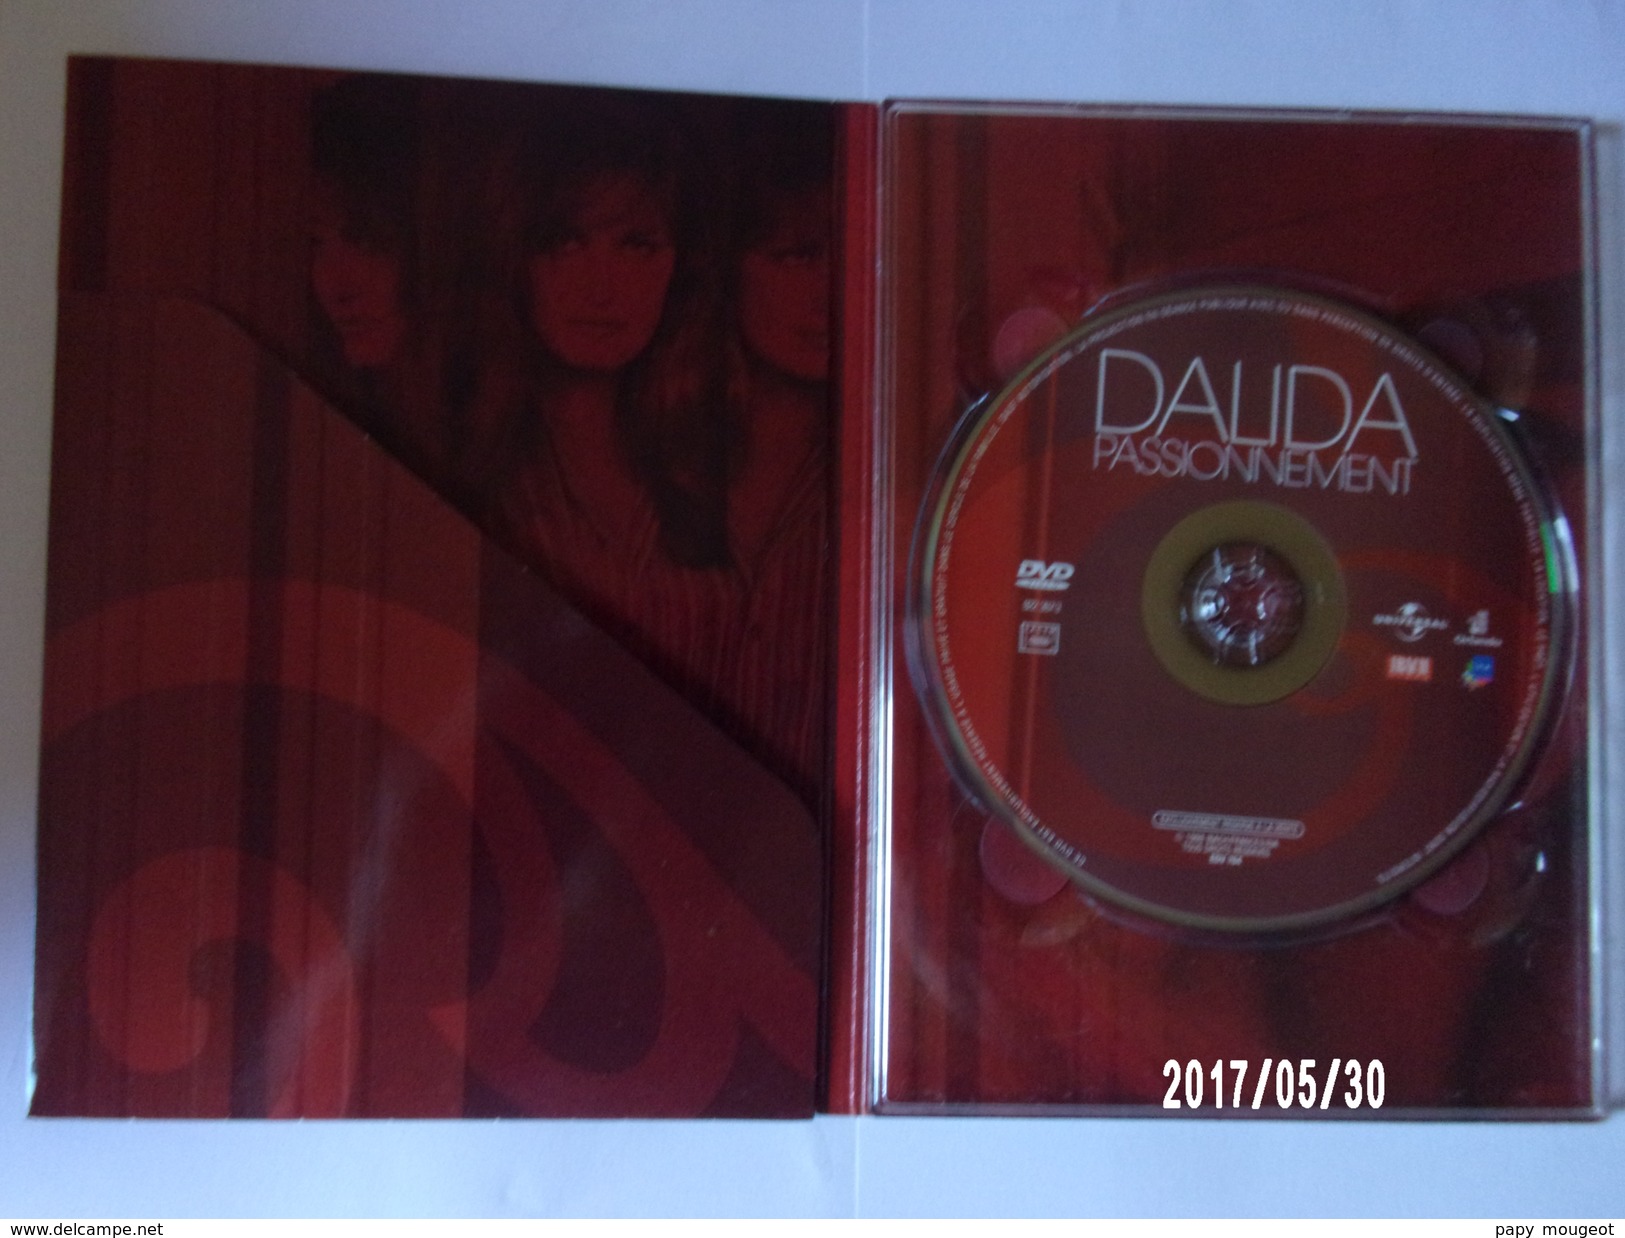 Dalida Passionnement - Music On DVD